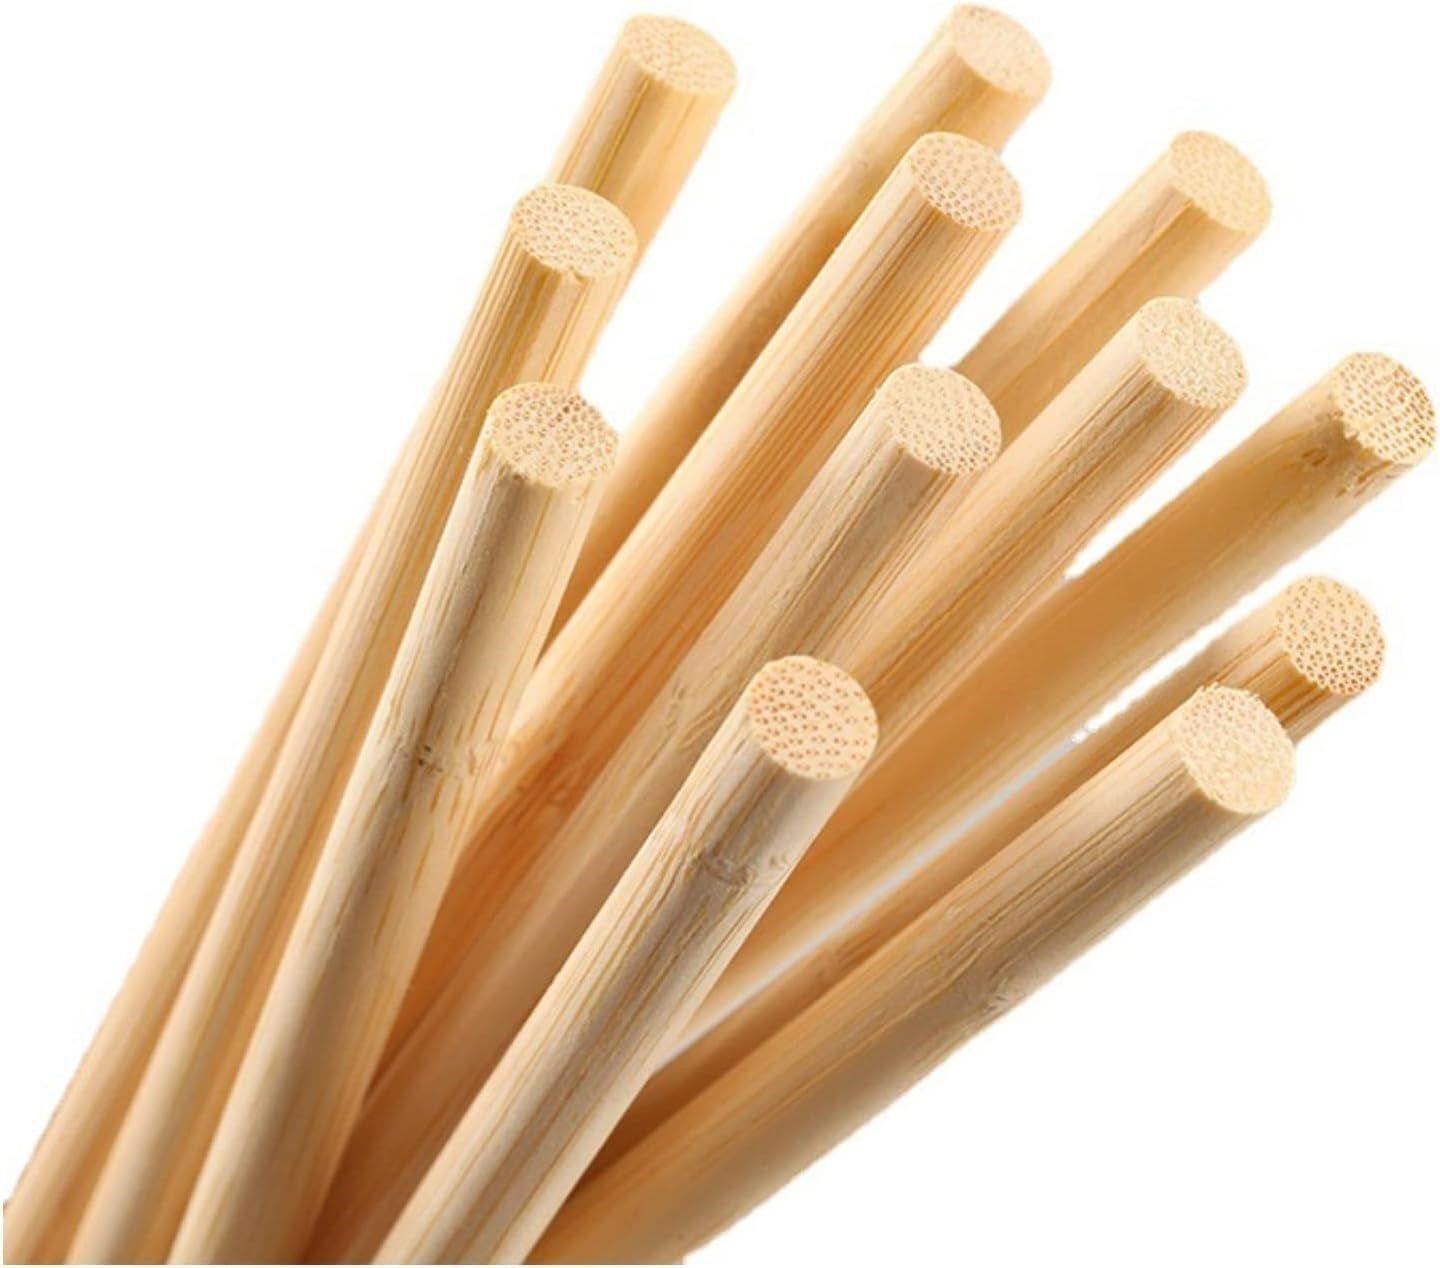 25PCS Dowel Rods Wood Sticks - 1/2 x 48 Inch